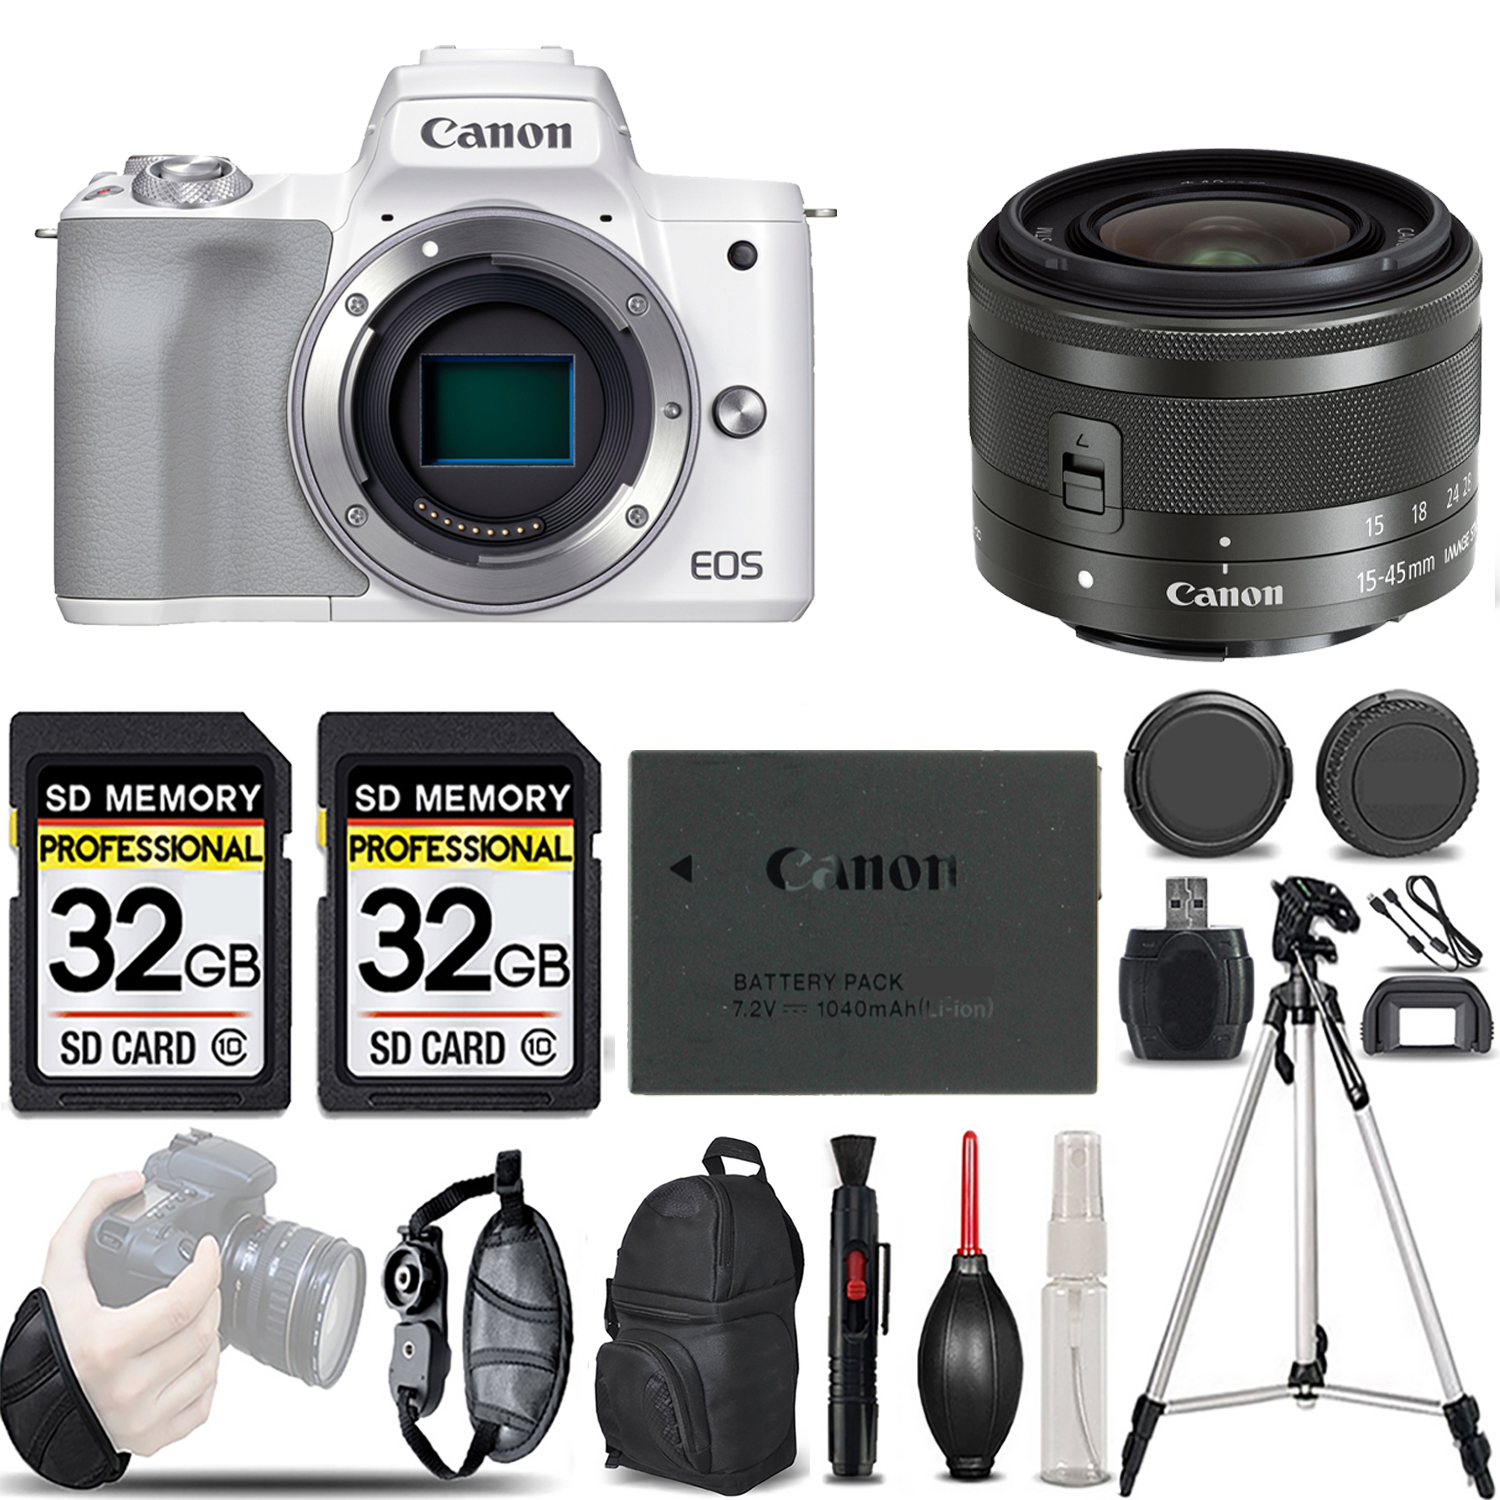 EOS M50 Mark II Camera (White) + 15-45mm IS STM Lens (Graphite) - LOADED KIT *FREE SHIPPING*